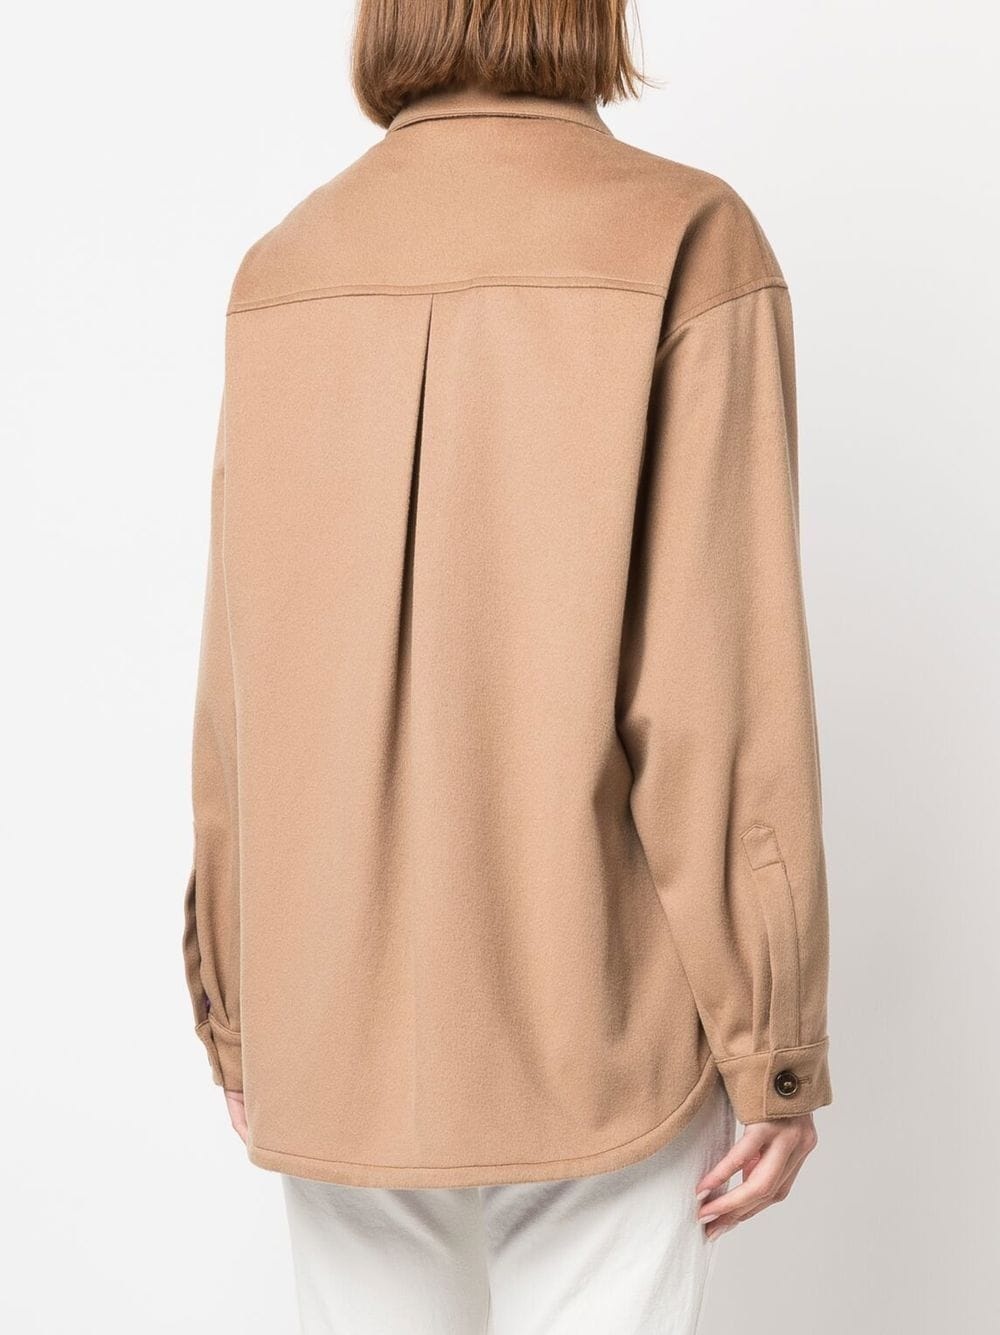 LORRIANE Light Camel Cotton Overshirt Jacket - 4